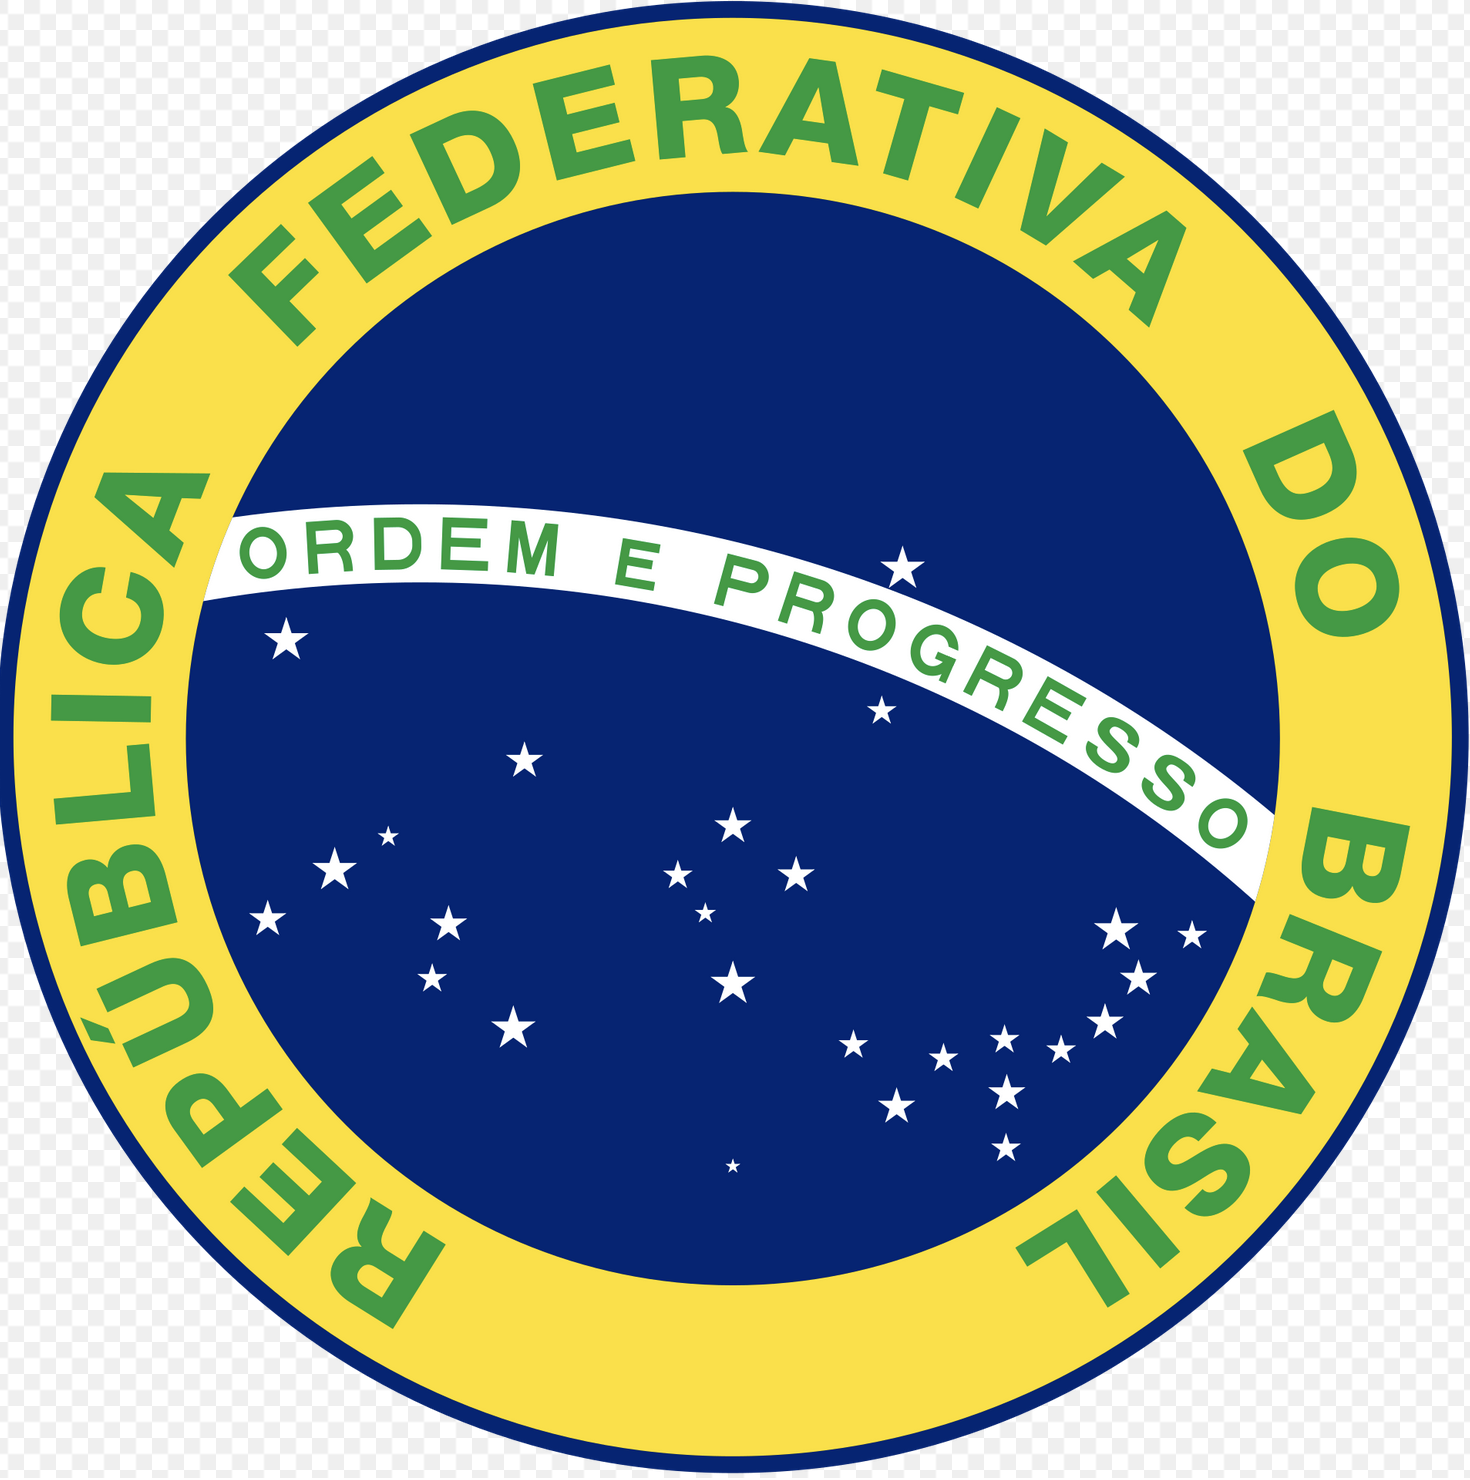 Brazil - General Data Protection Law (LGPD)